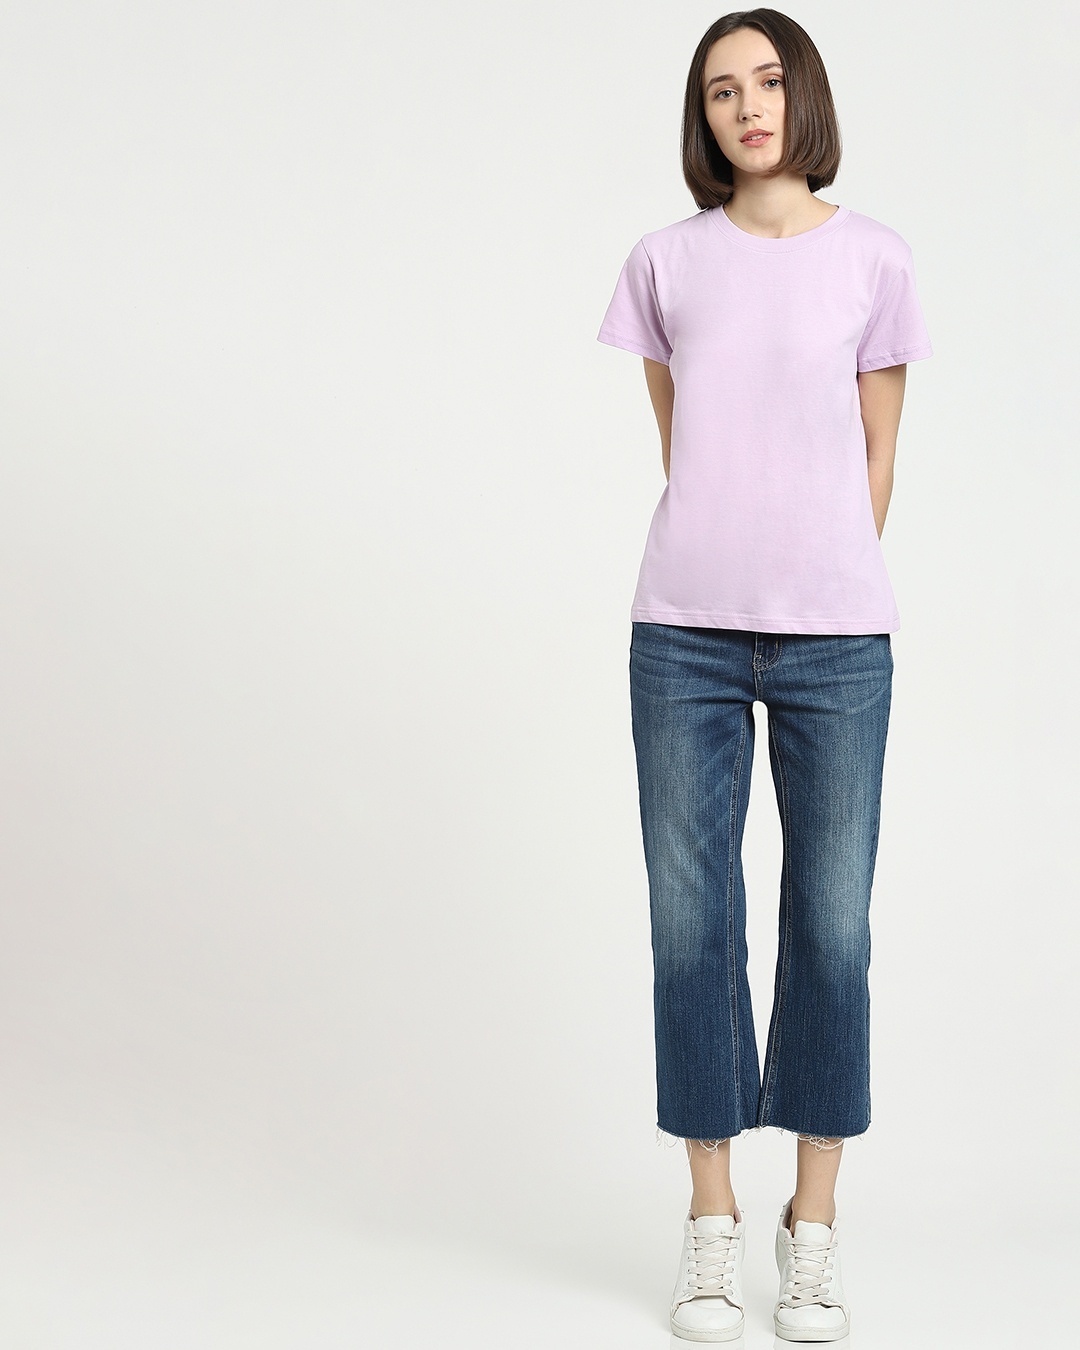 Shop Women's Whit & Purple Slim Fit T-shirt Pack of 2